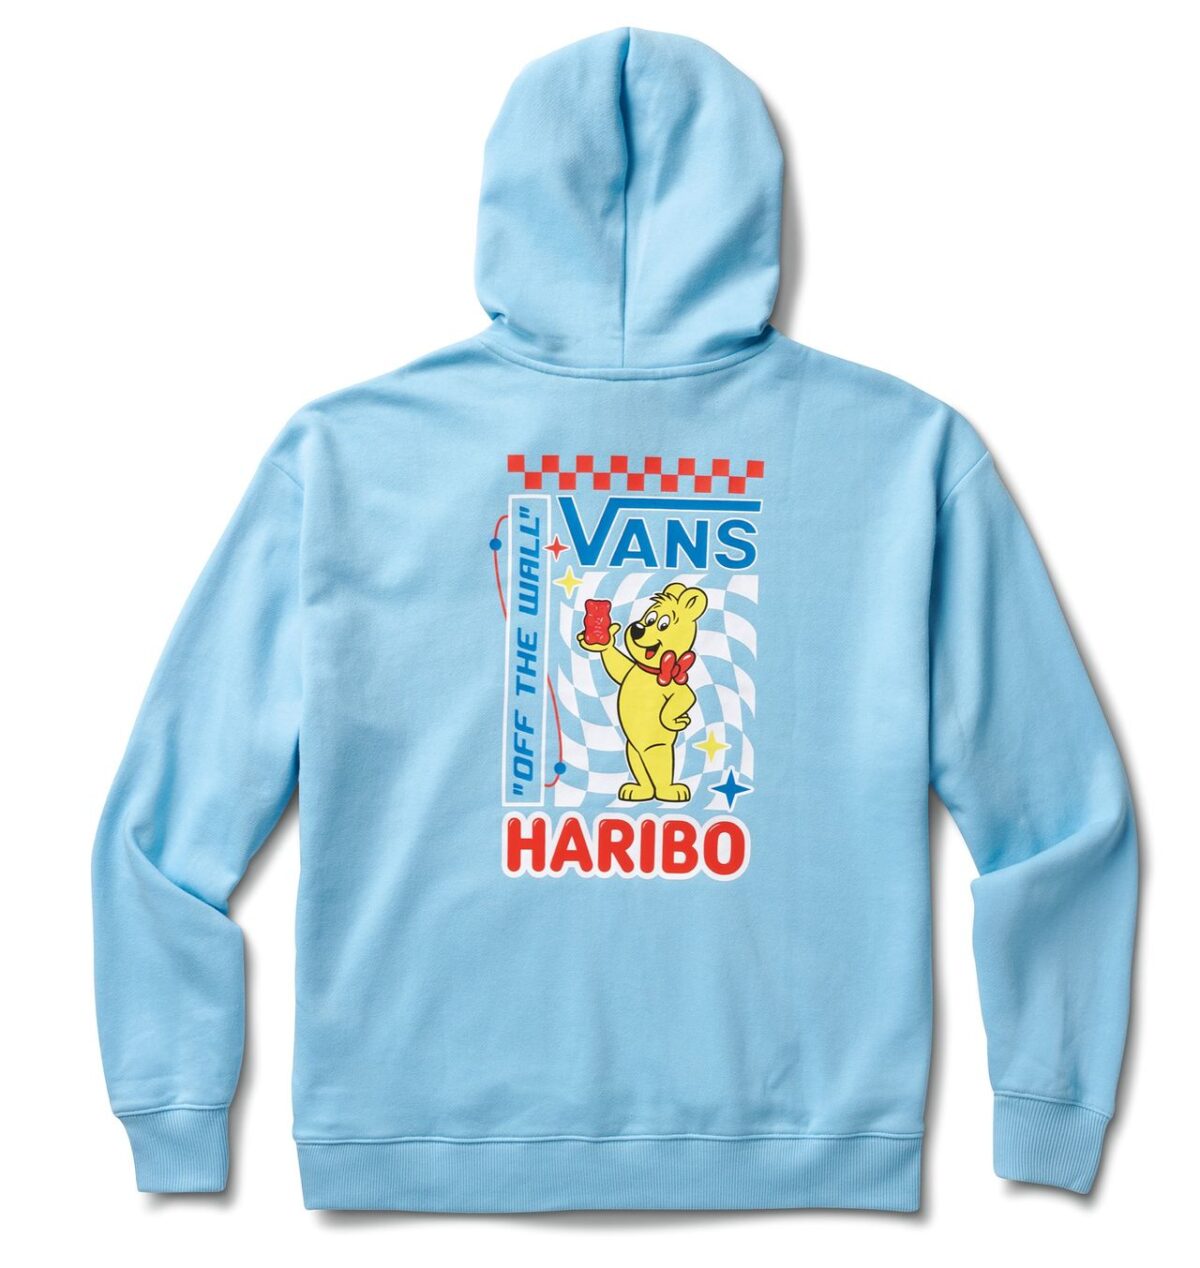 Vans Haribo collection